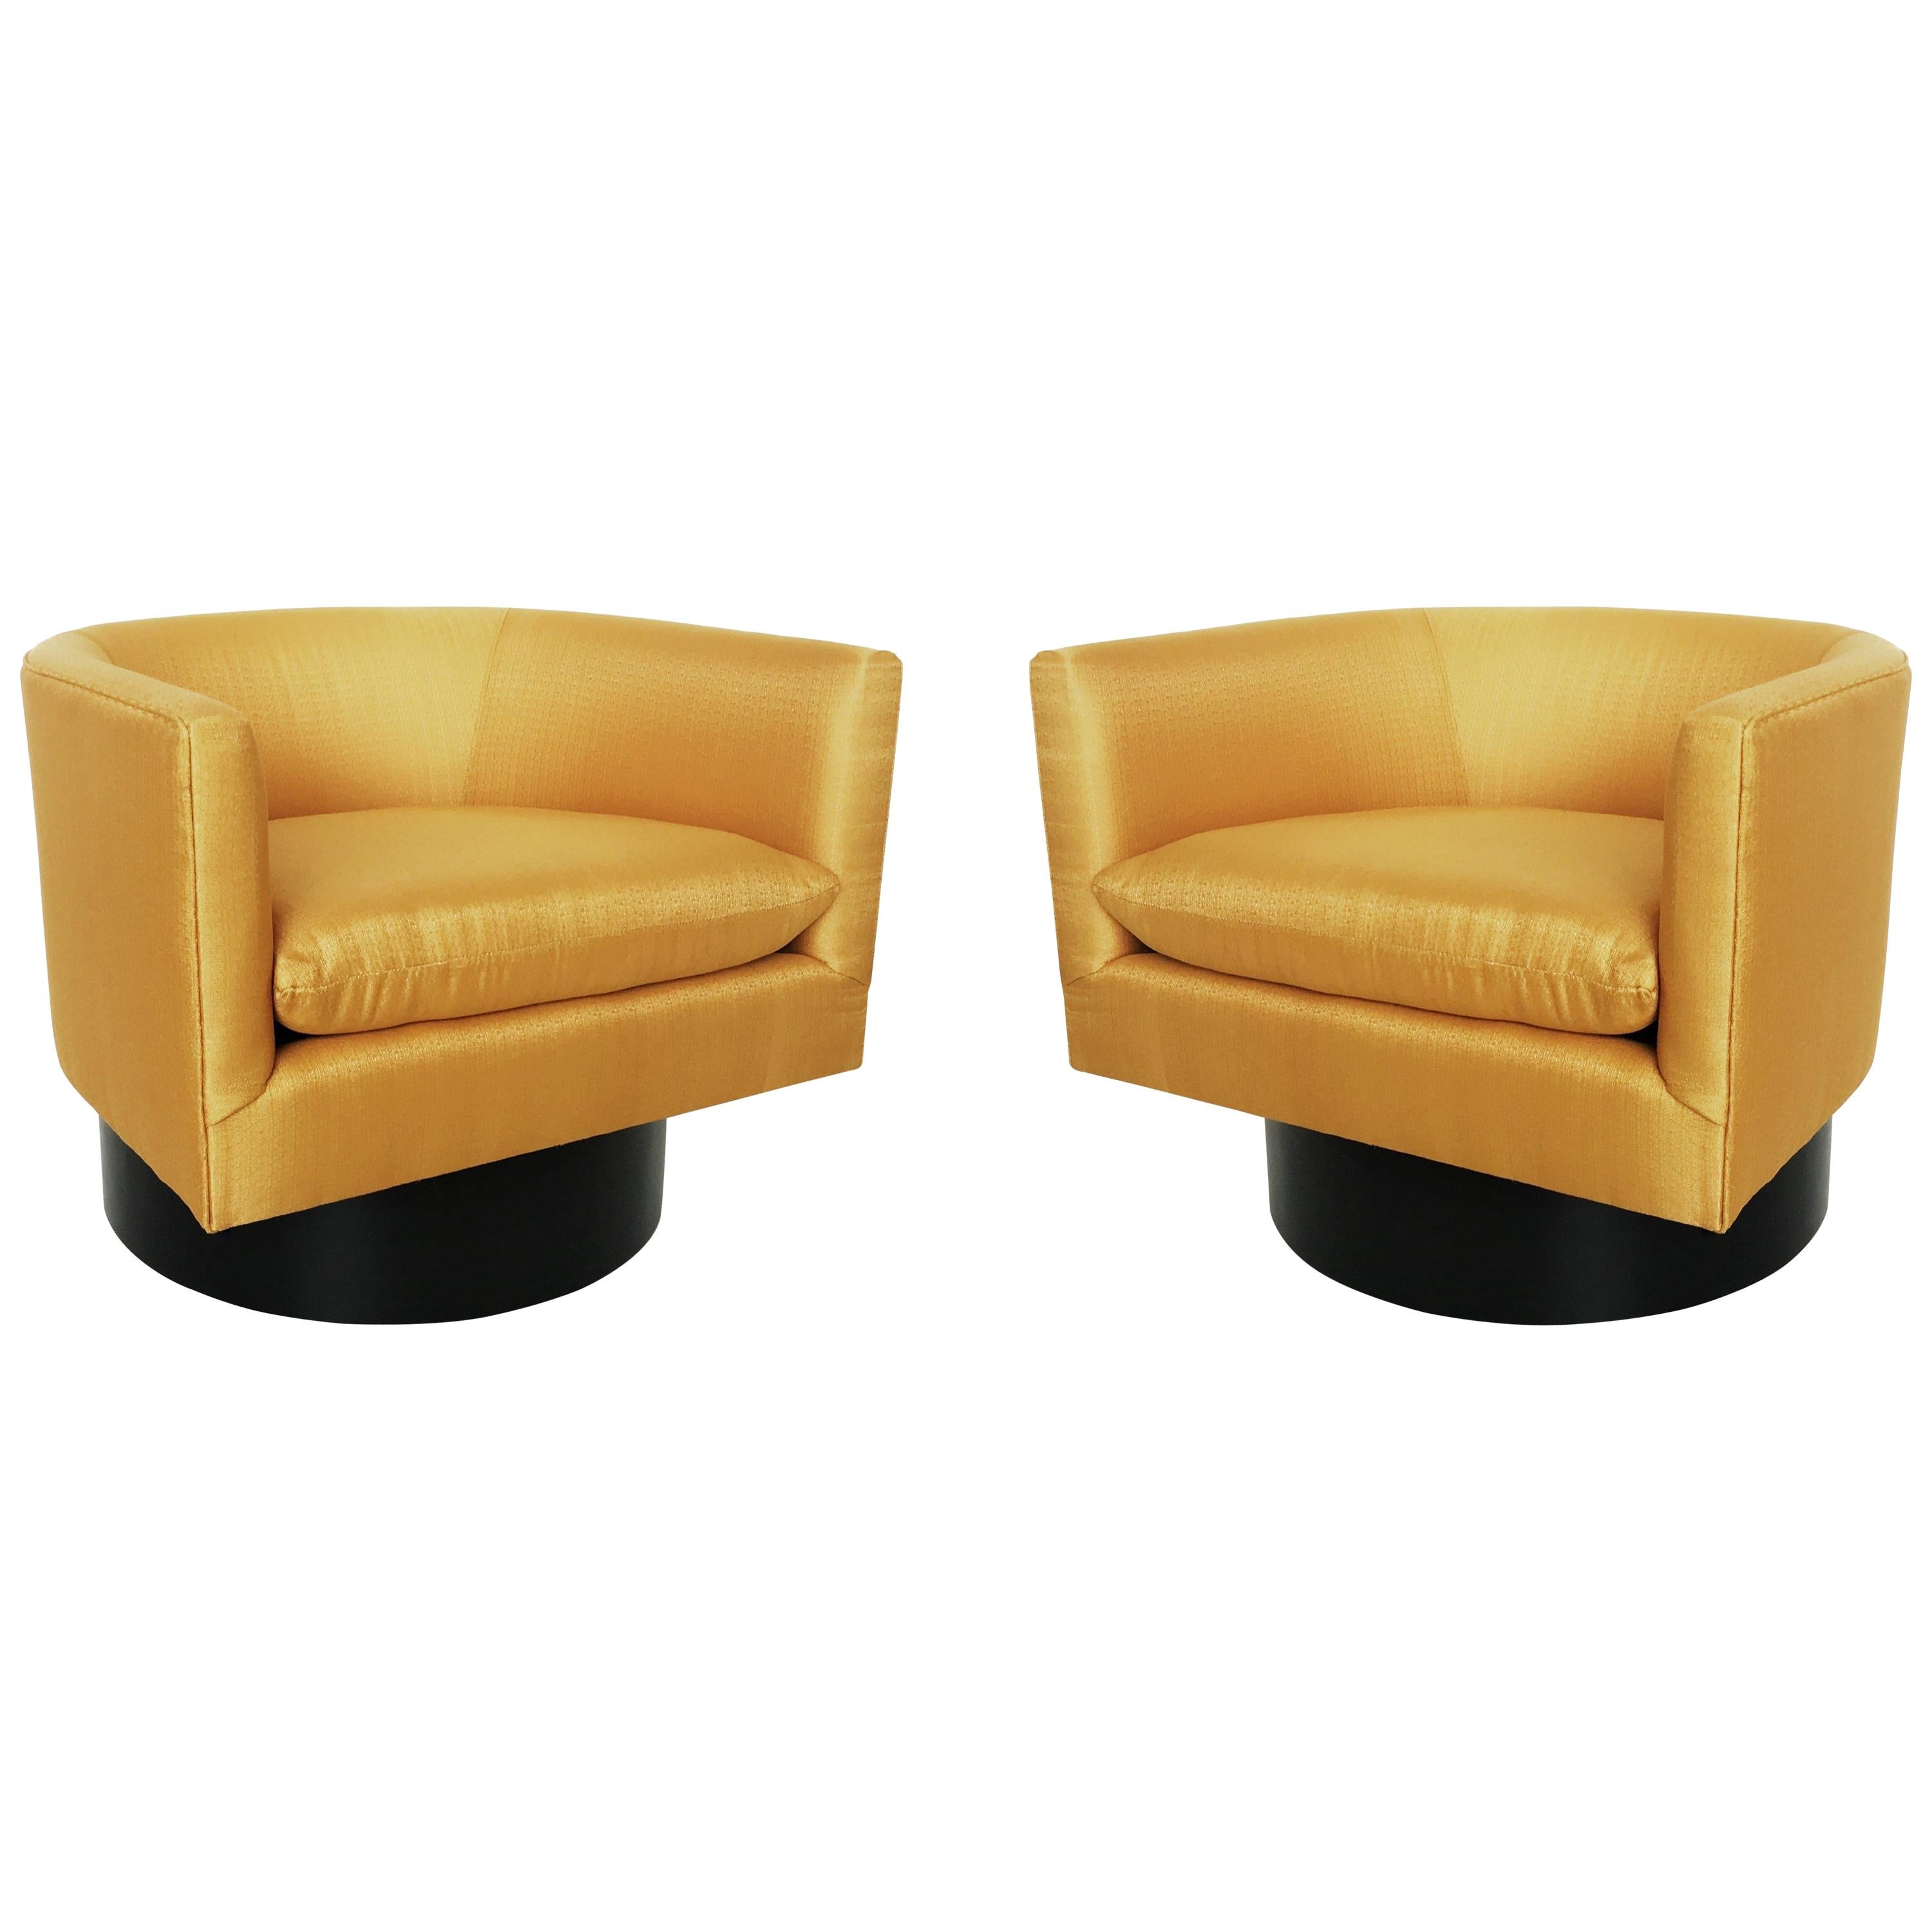 Pair of Milo Baughman Modern Barrel Back Swivel Chairs